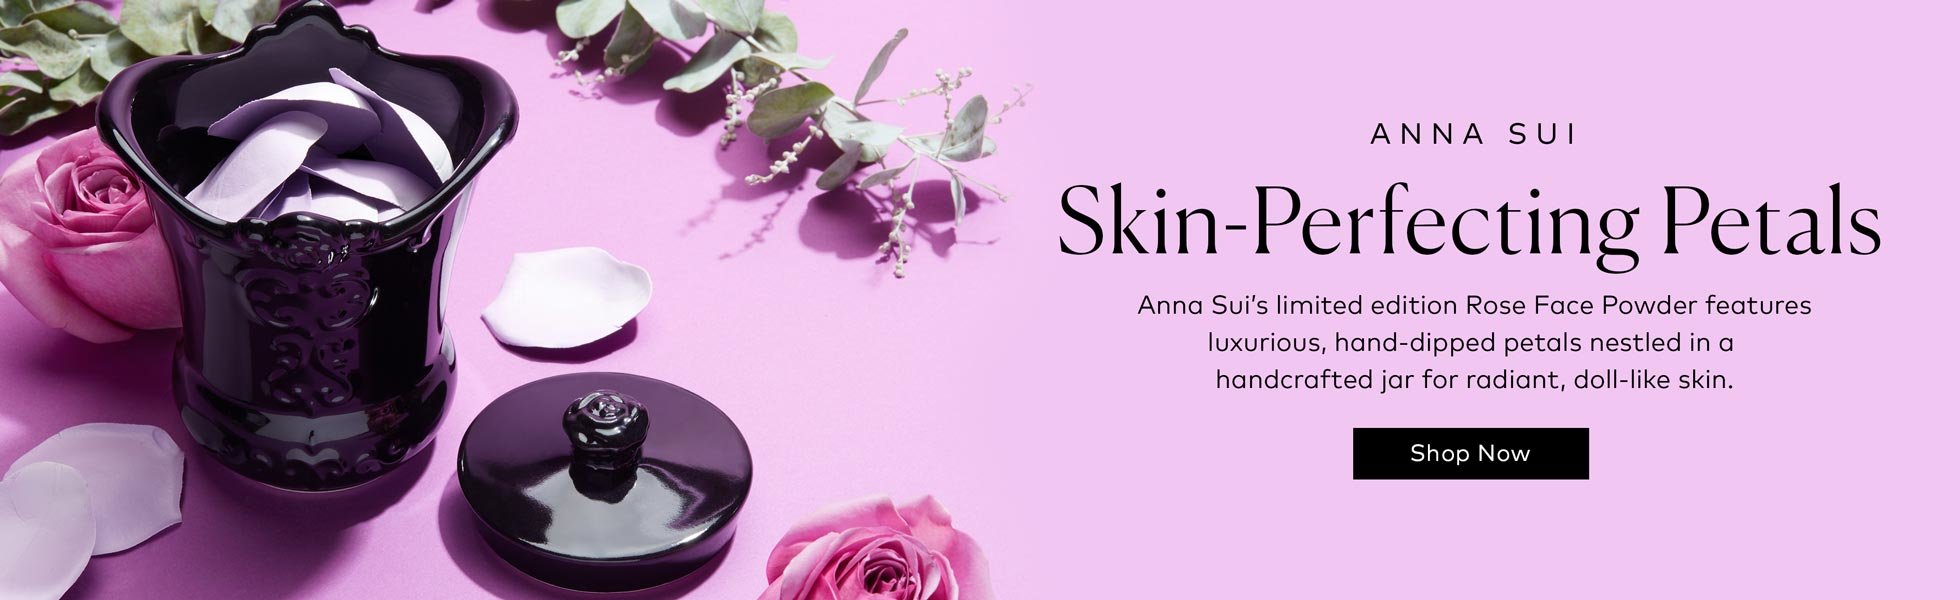 Shop the Anna Sui Rose Face Powder on Beautylish.com! 